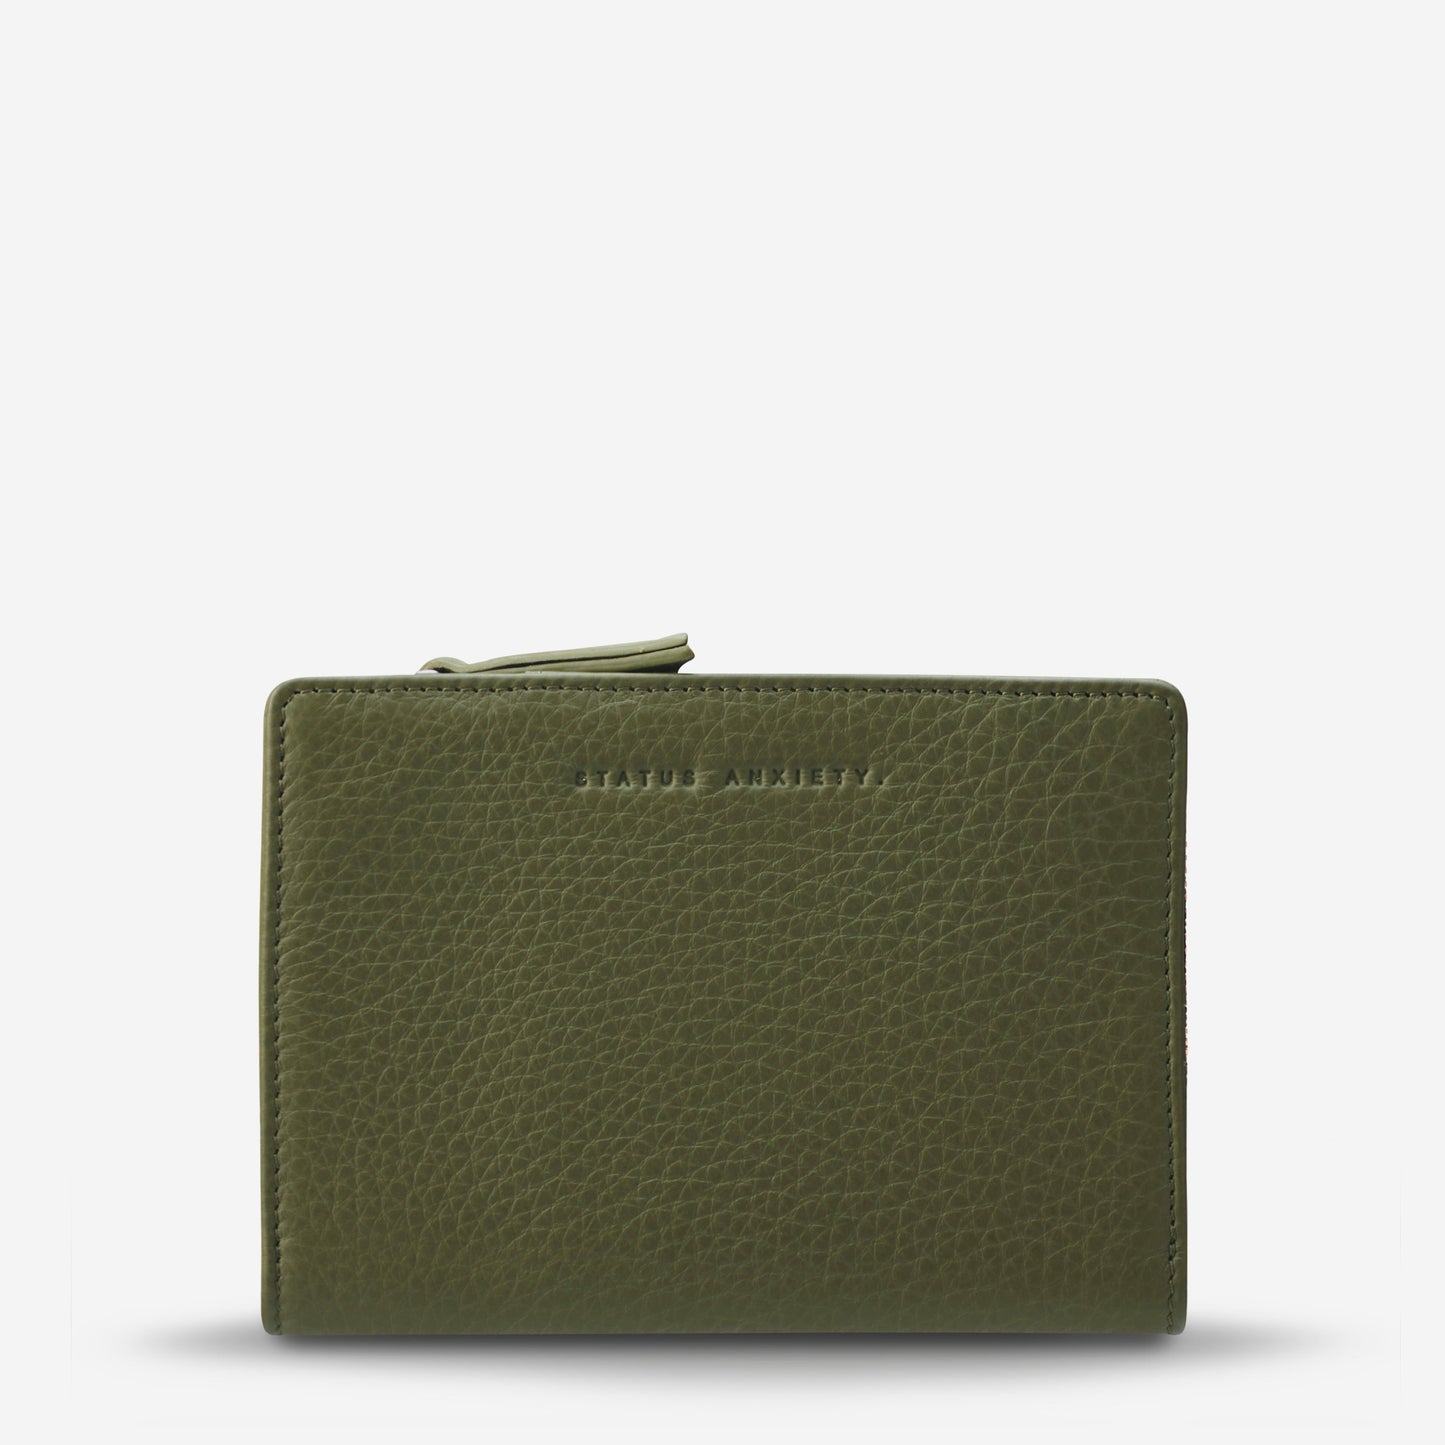 Insurgency Leather Wallet - Khaki